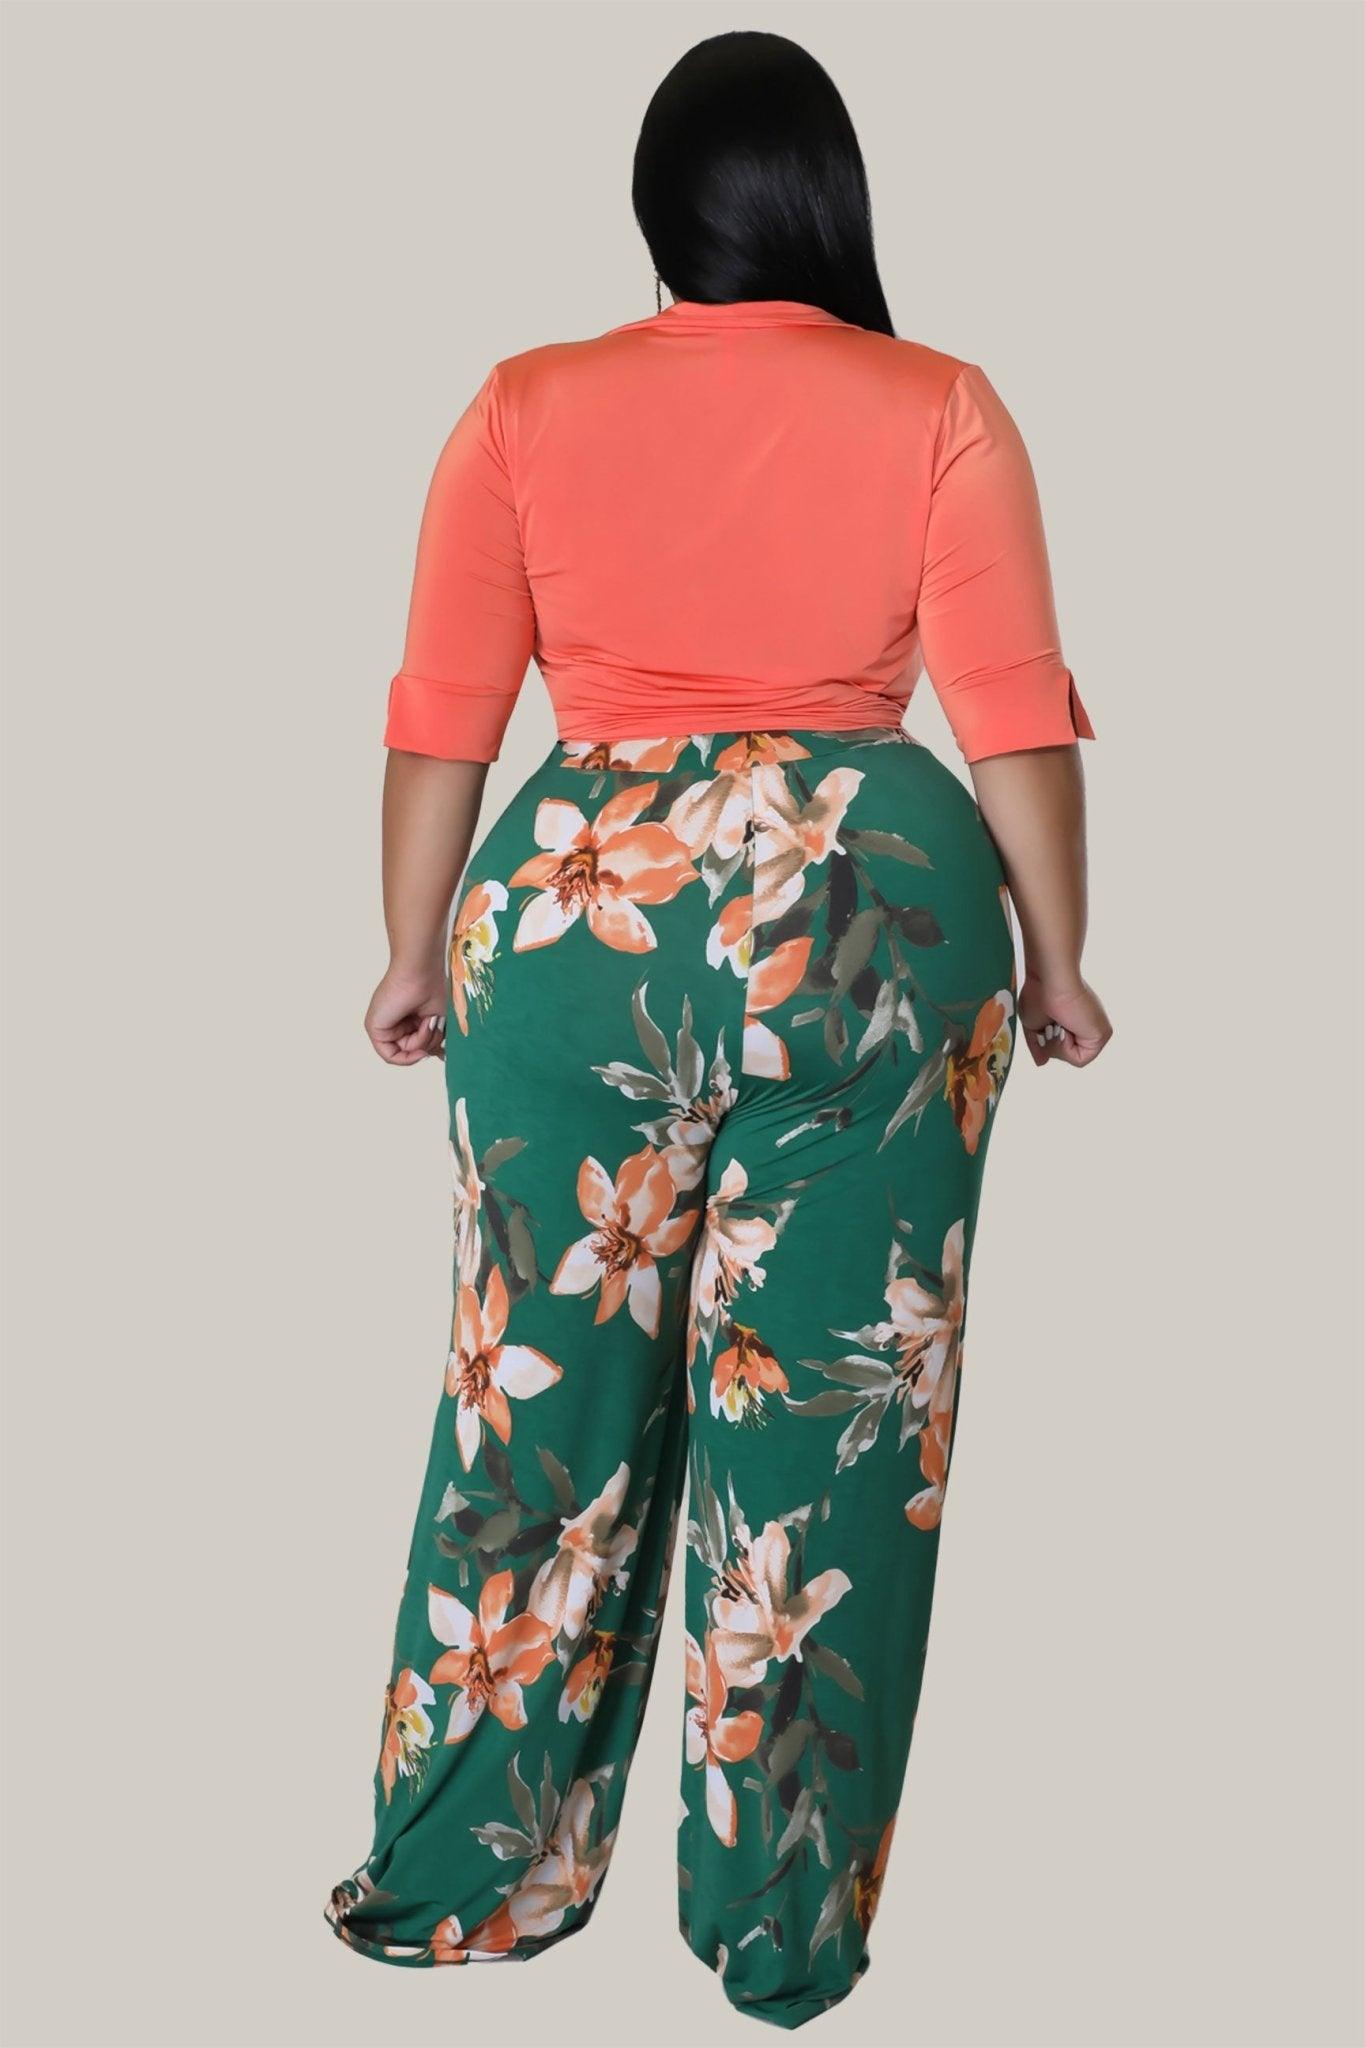 Everlee Floral Print 2 PC High Waist Pants Set - MY SEXY STYLES